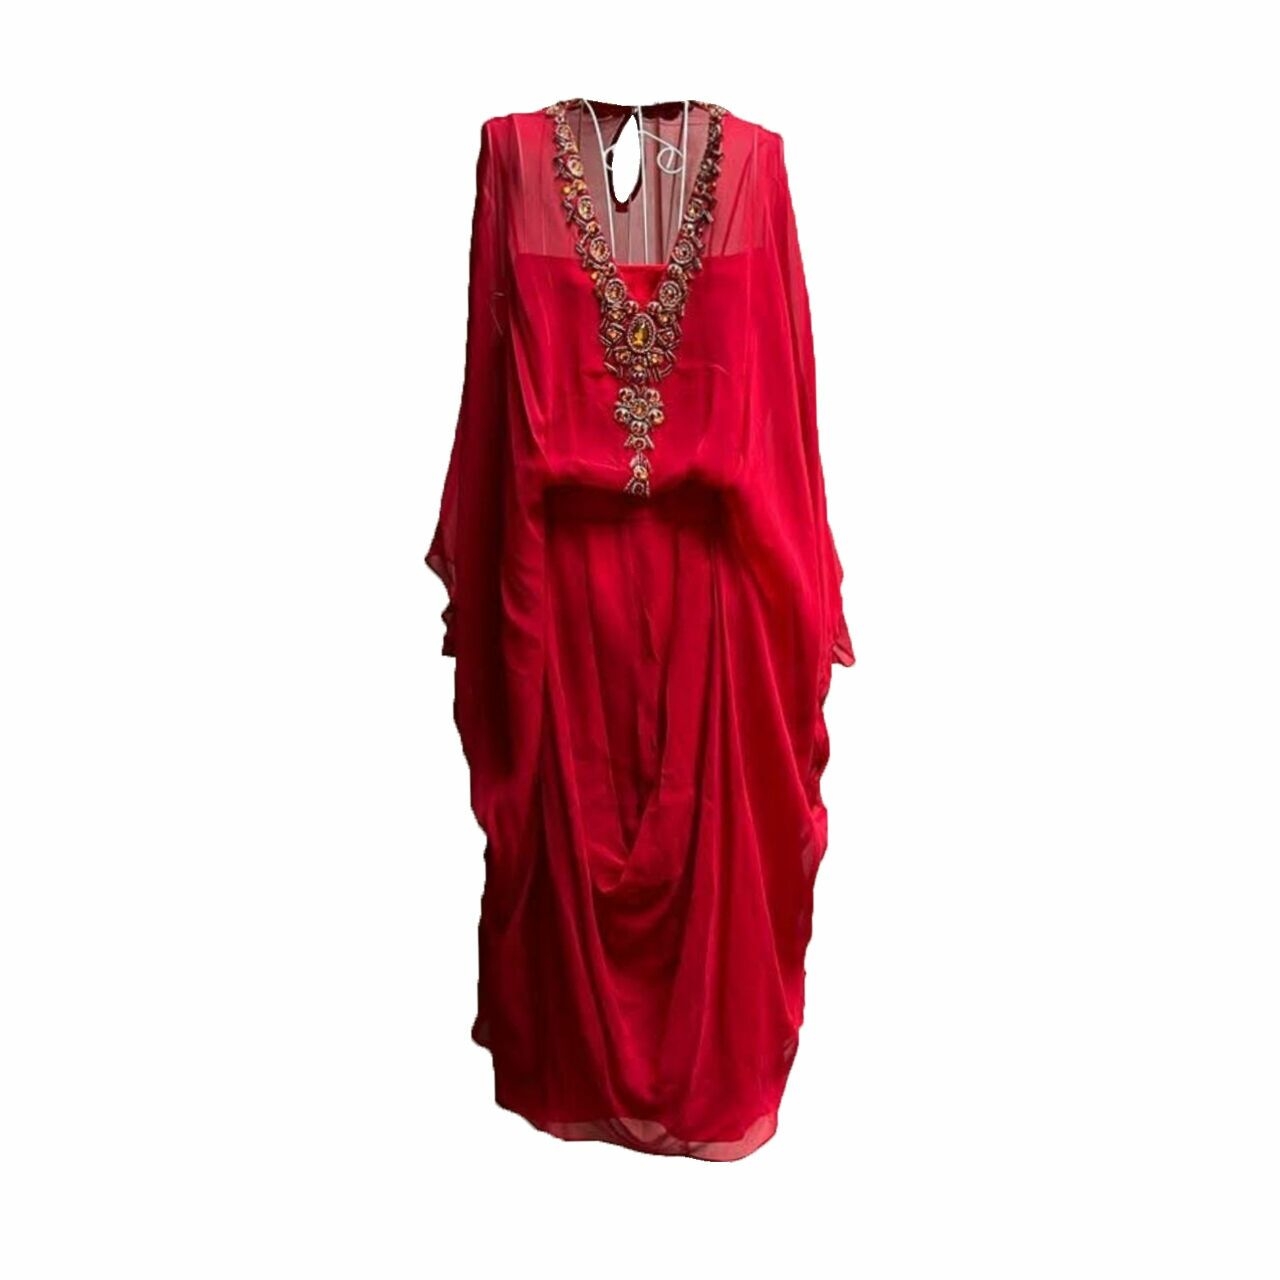 VOTUM By Sebastian & Cristina Red Long Dress